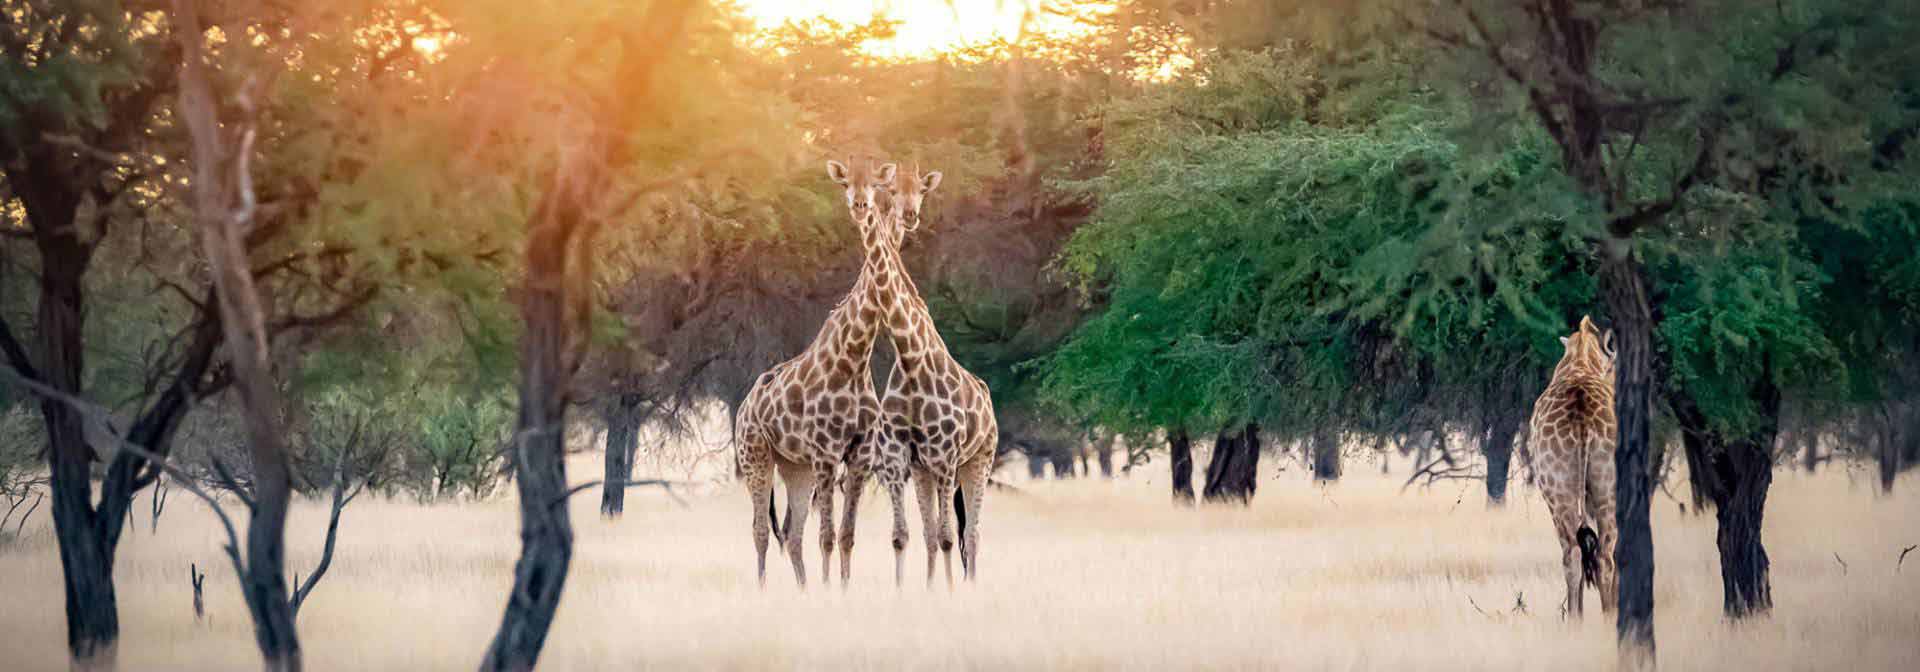 Giraffen in der Kalahari 